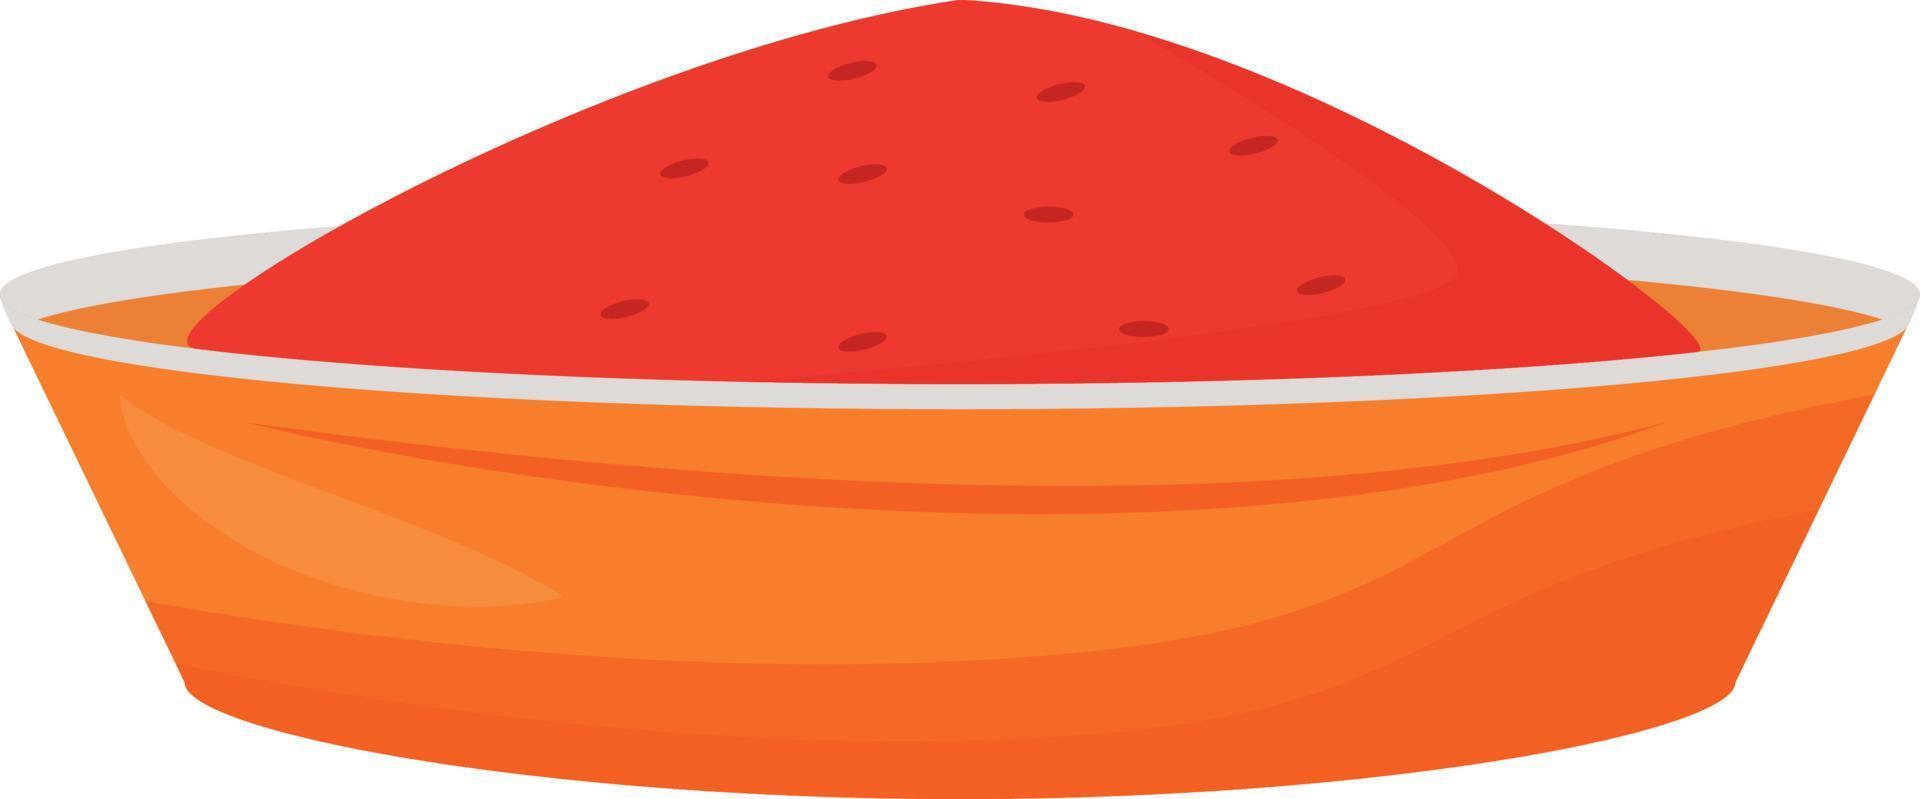 rood voedsel in oranje kom semi-egale kleur vectorelement vector